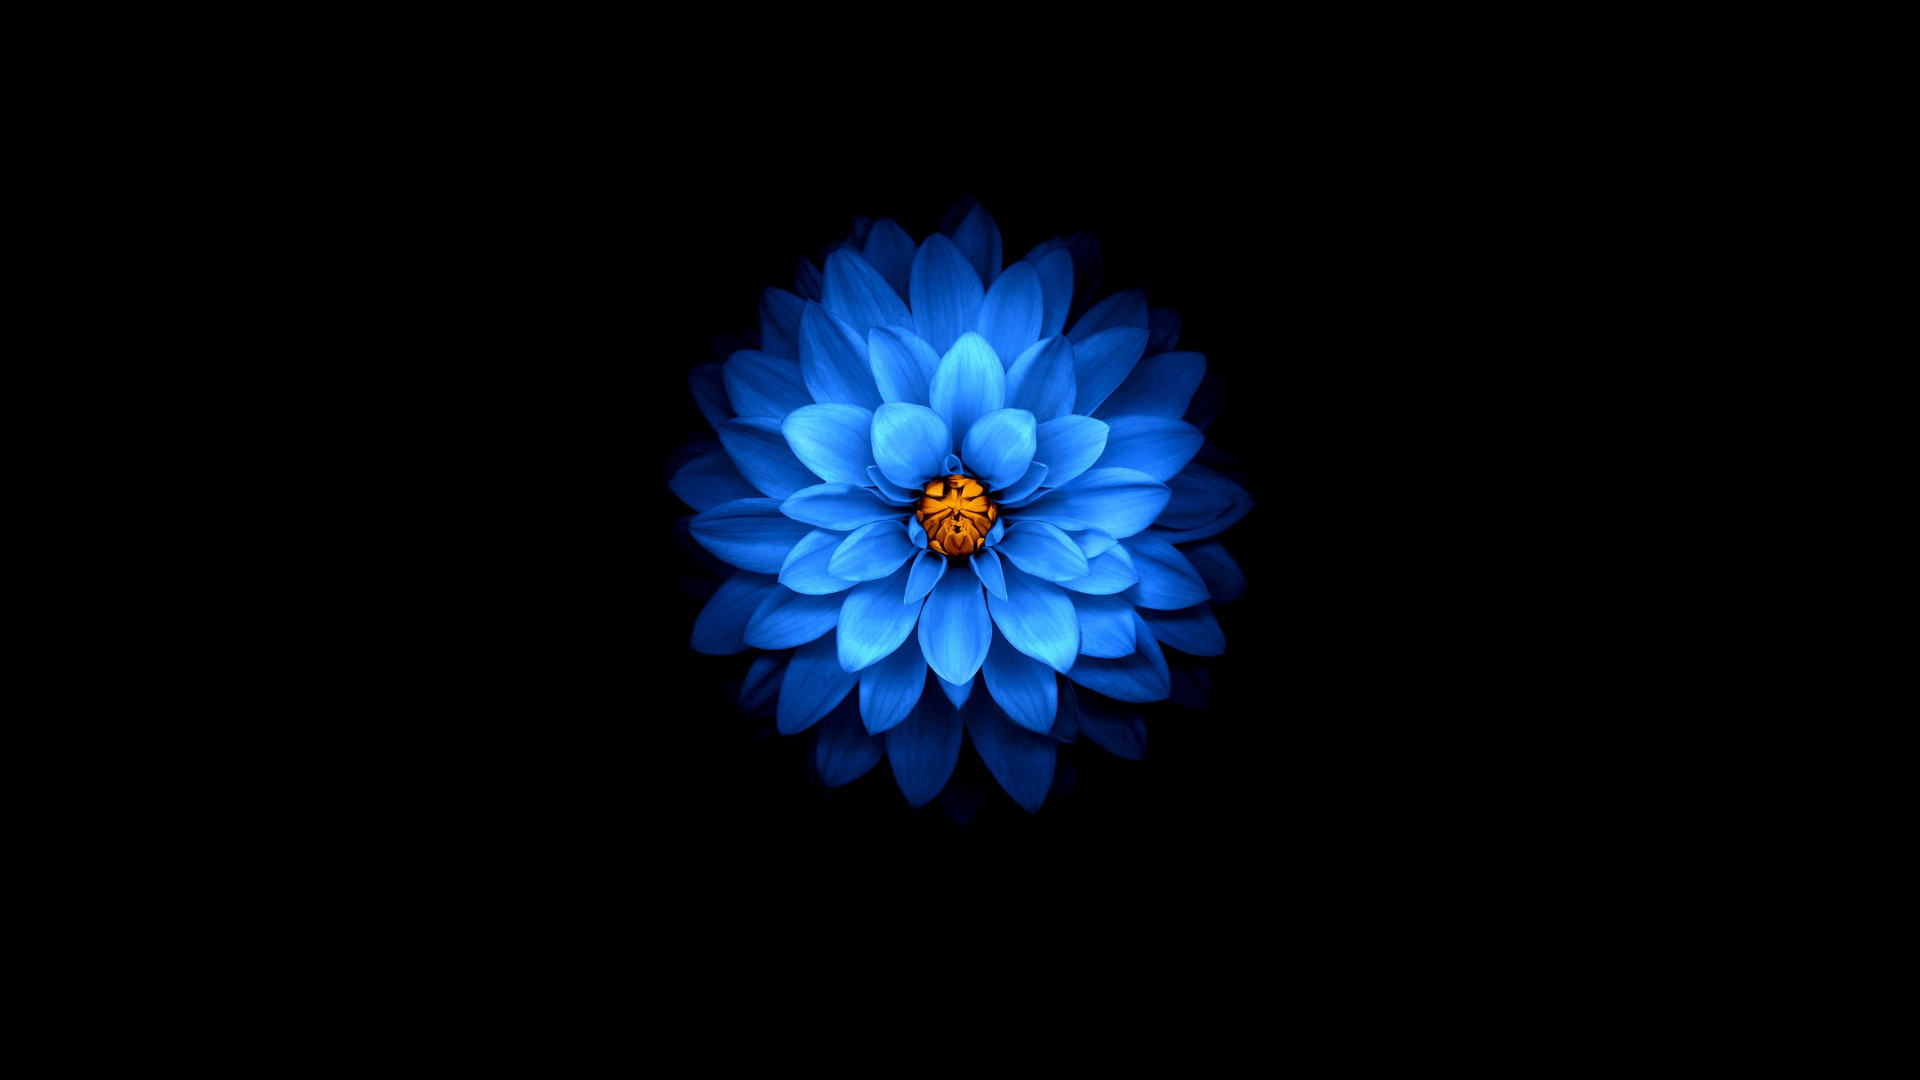 Download blue flower, dark, amoled 1920x1080 wallpaper, full hd, hdtv